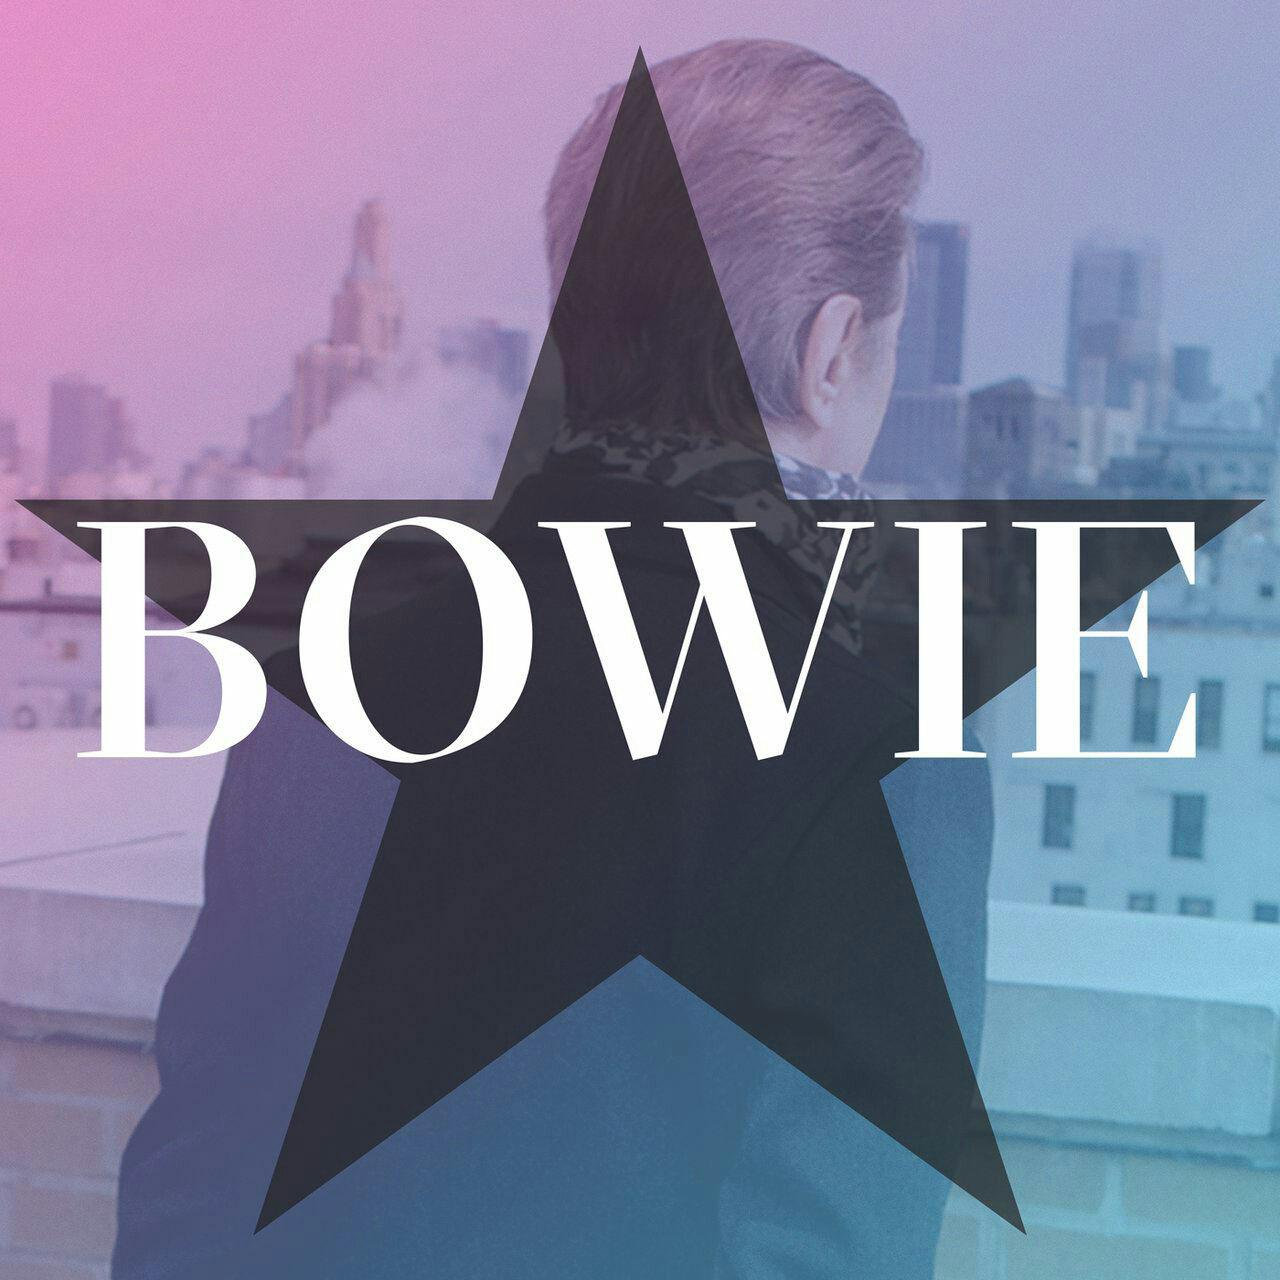 דייוויד בואי  - אין תוכנית - (David Bowie  - No Plan (EP - אלבום חדש